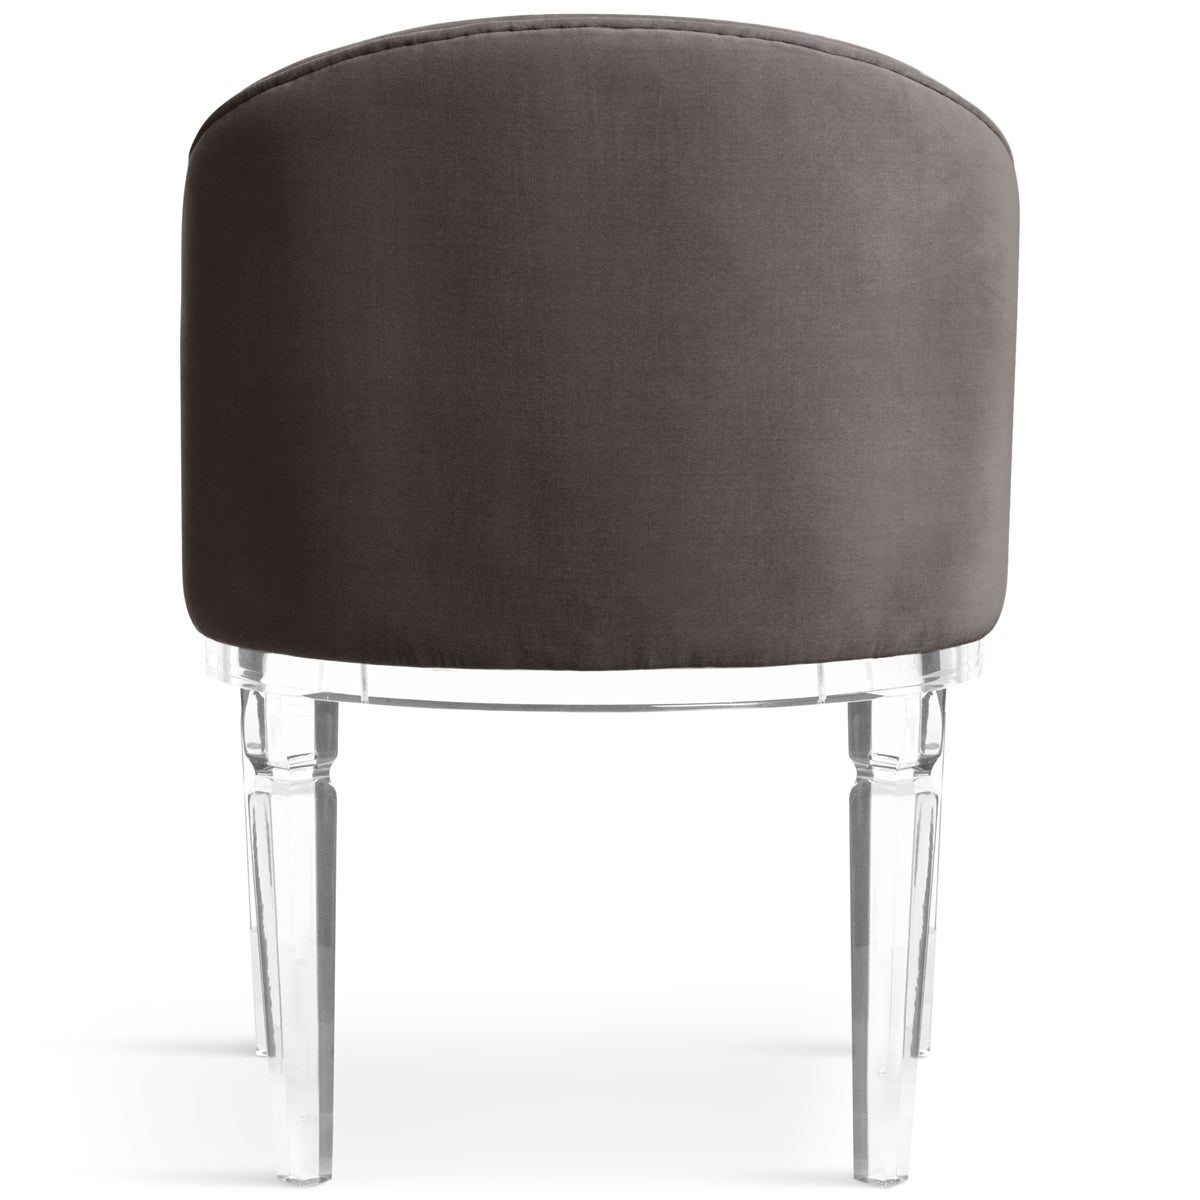 Bel Air Dining Chair - ModShop1.com